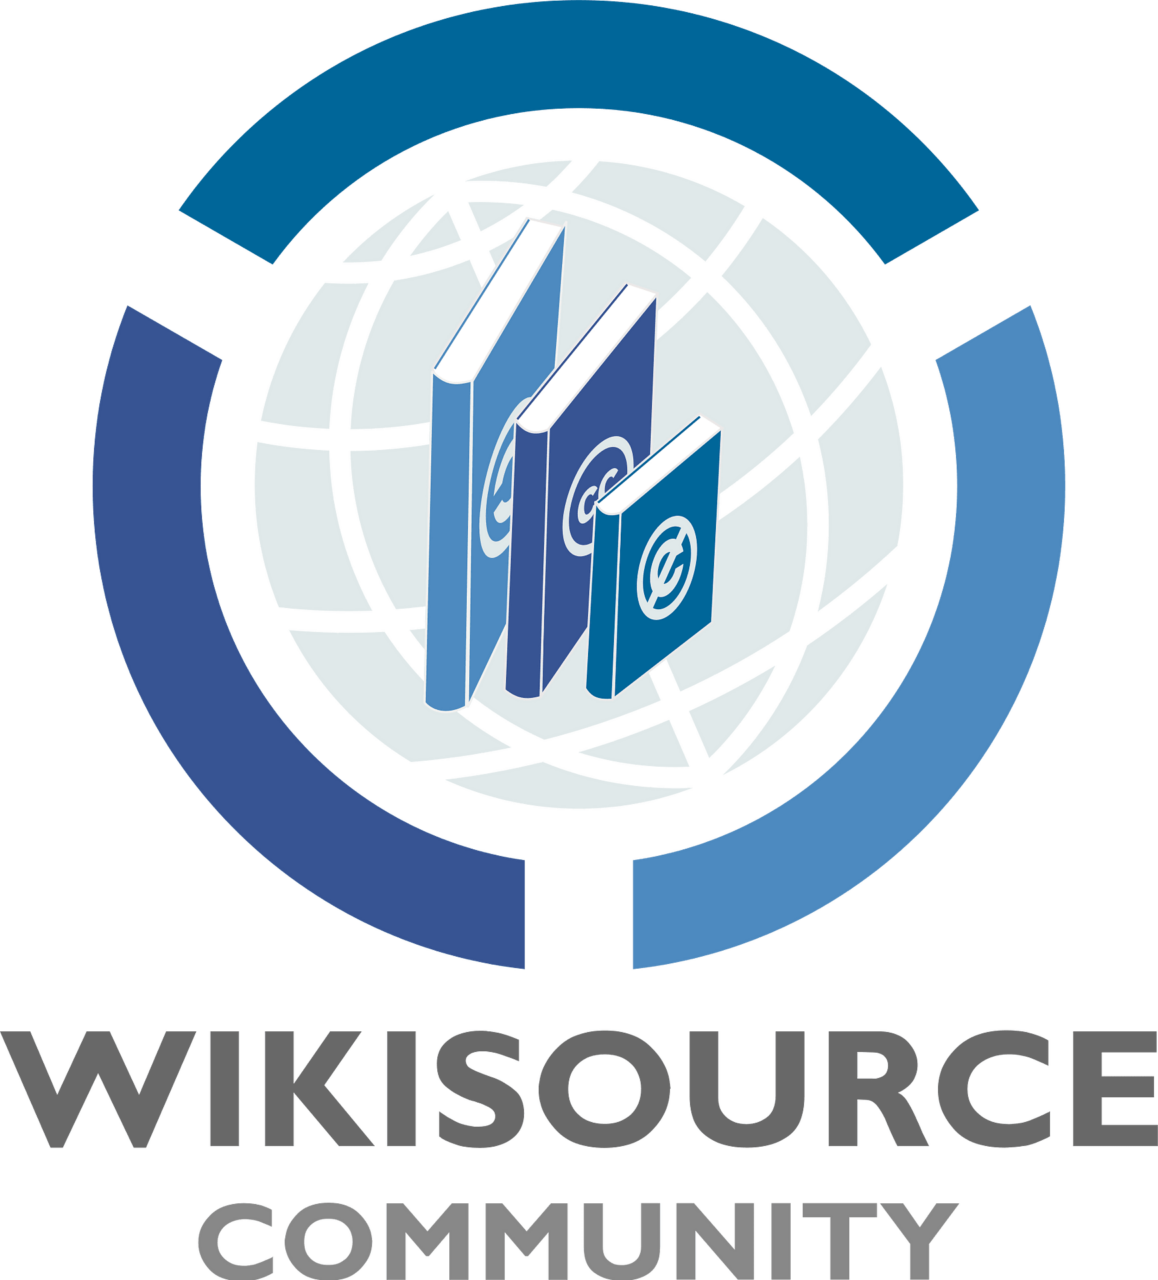 Proxy wikisource.org